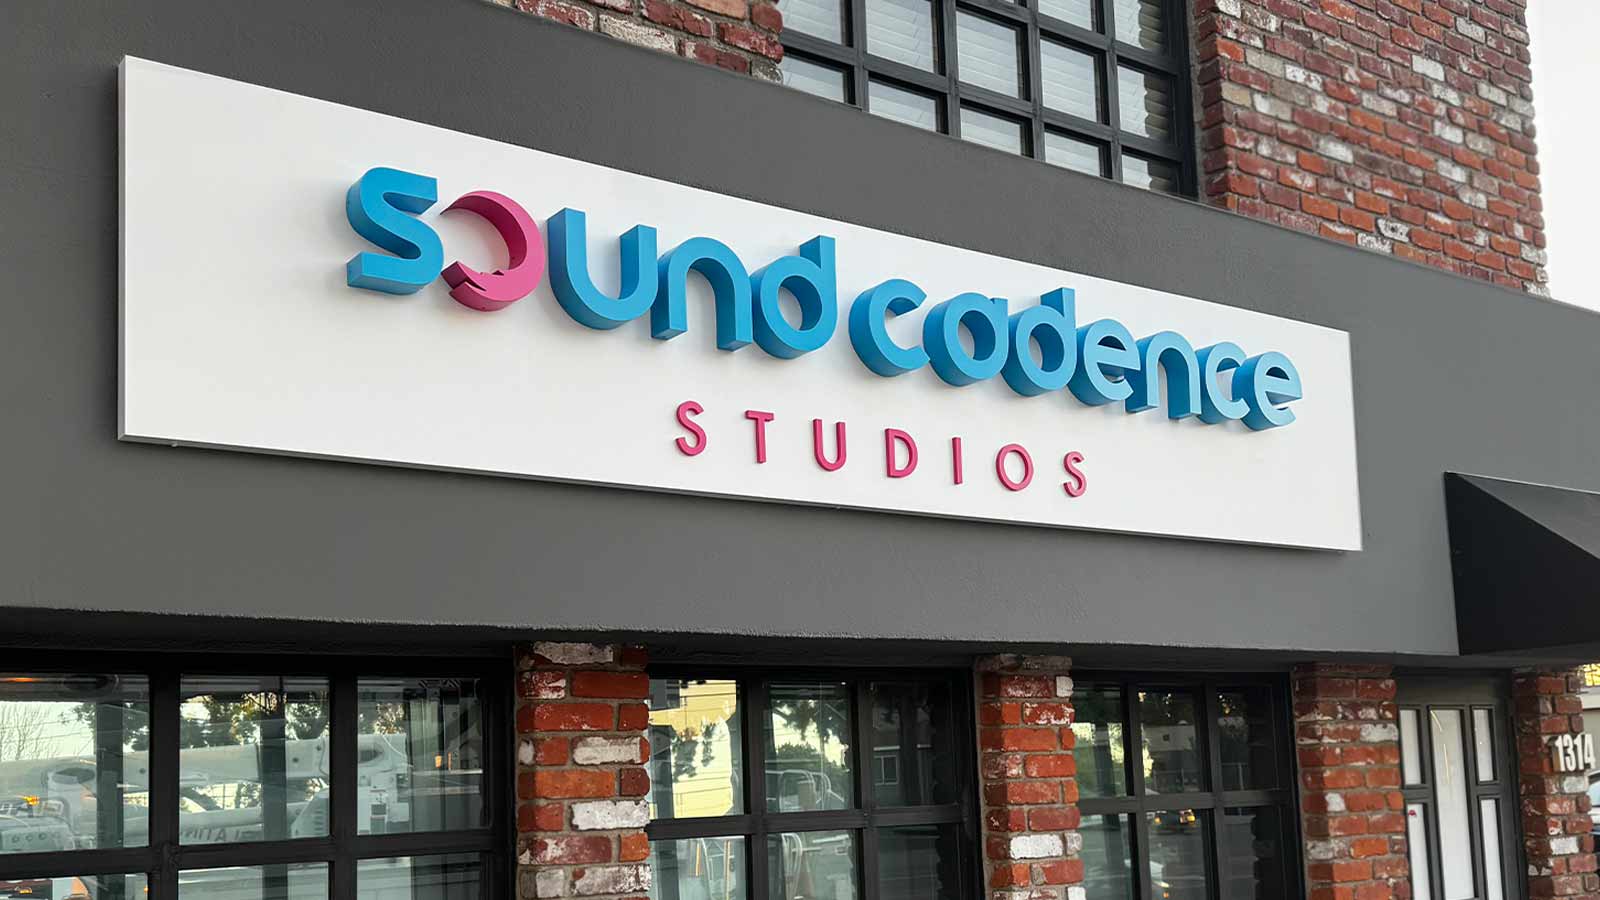 sound cadence studios outdoor sign mounted on the facade